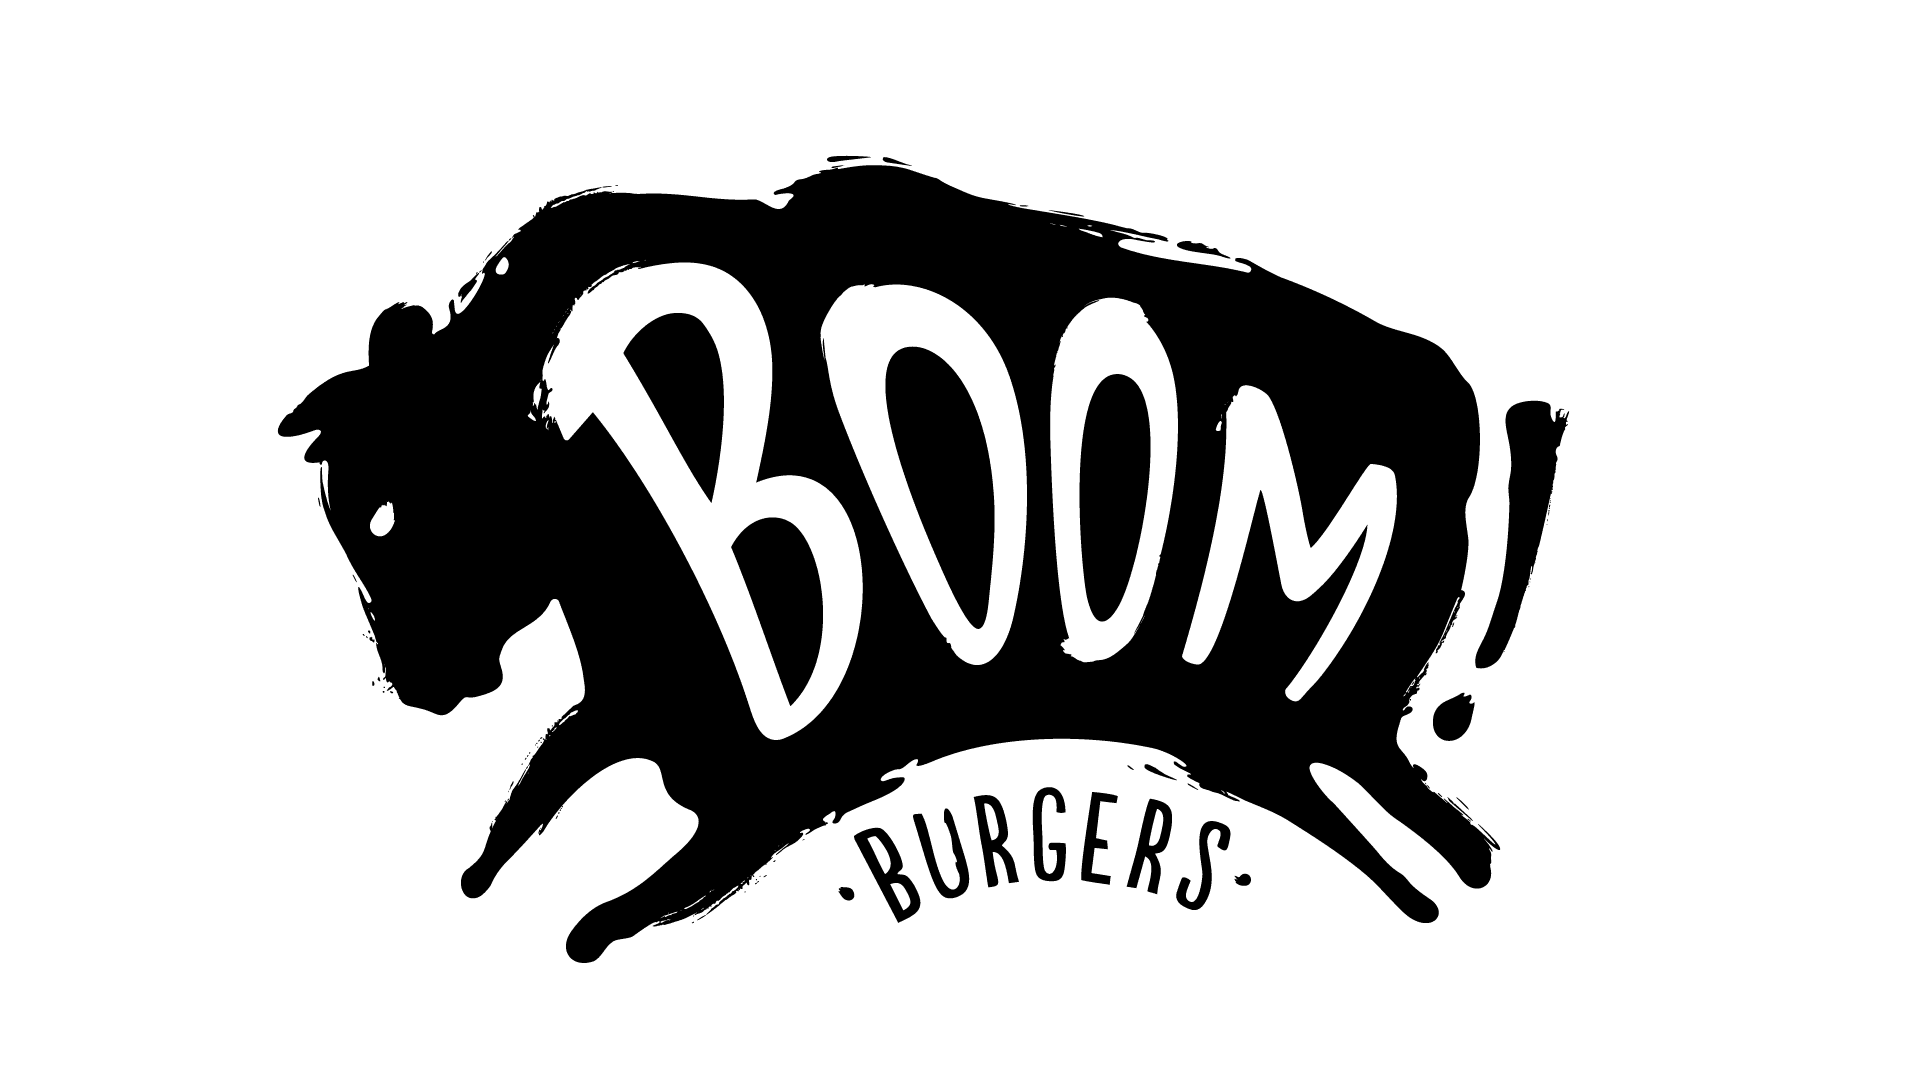 Boomburger